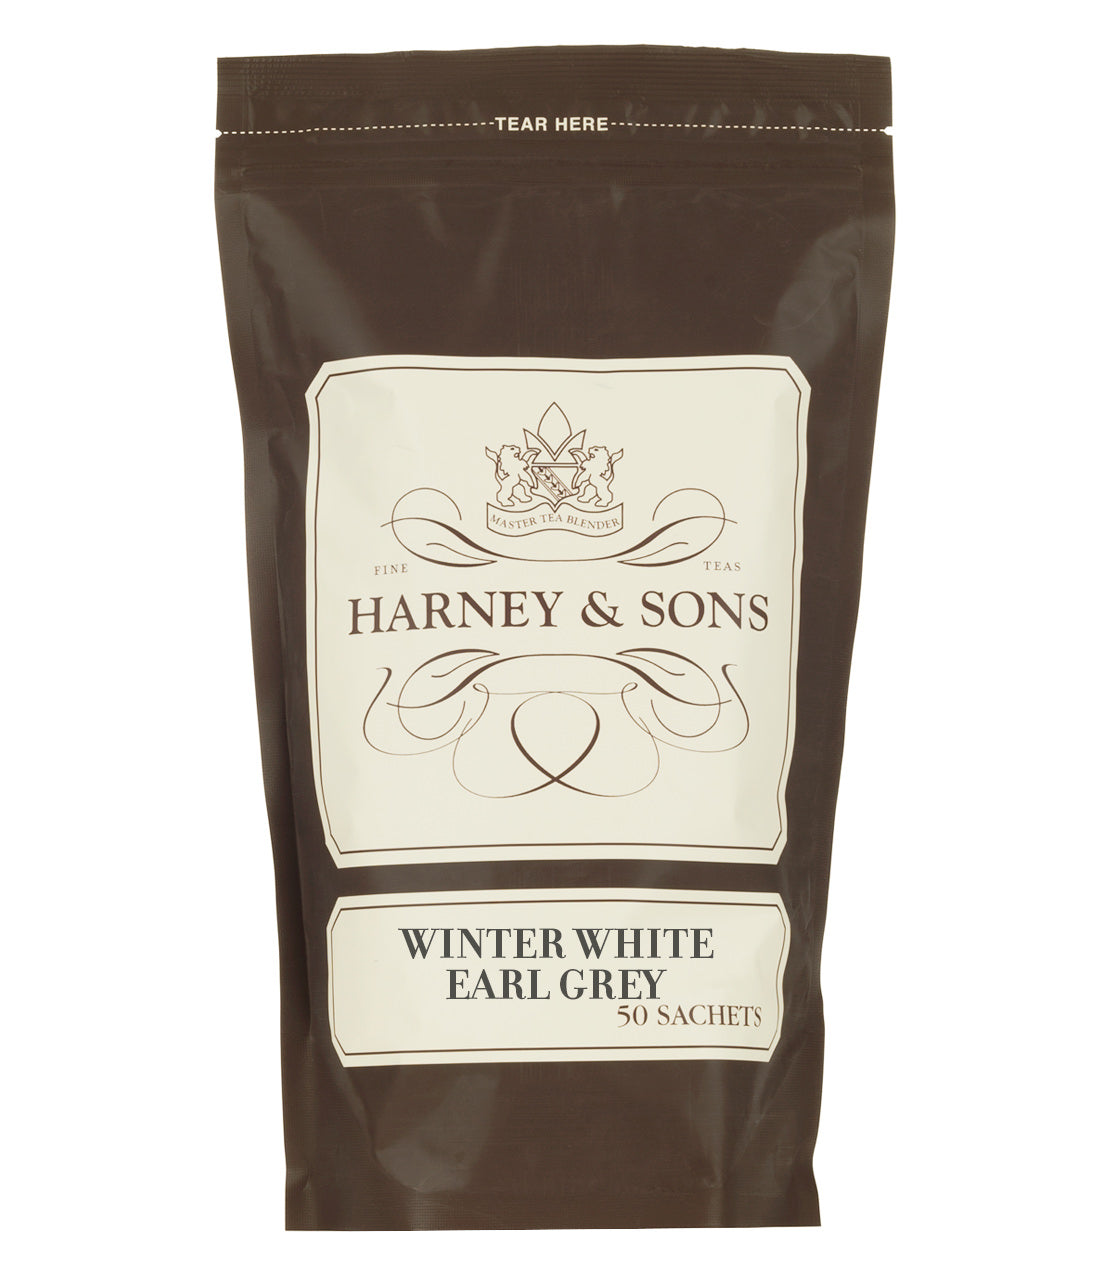 Winter White Earl Grey, Bag of 50 Sachets - Sachets Bag of 50 Sachets - Harney & Sons Fine Teas